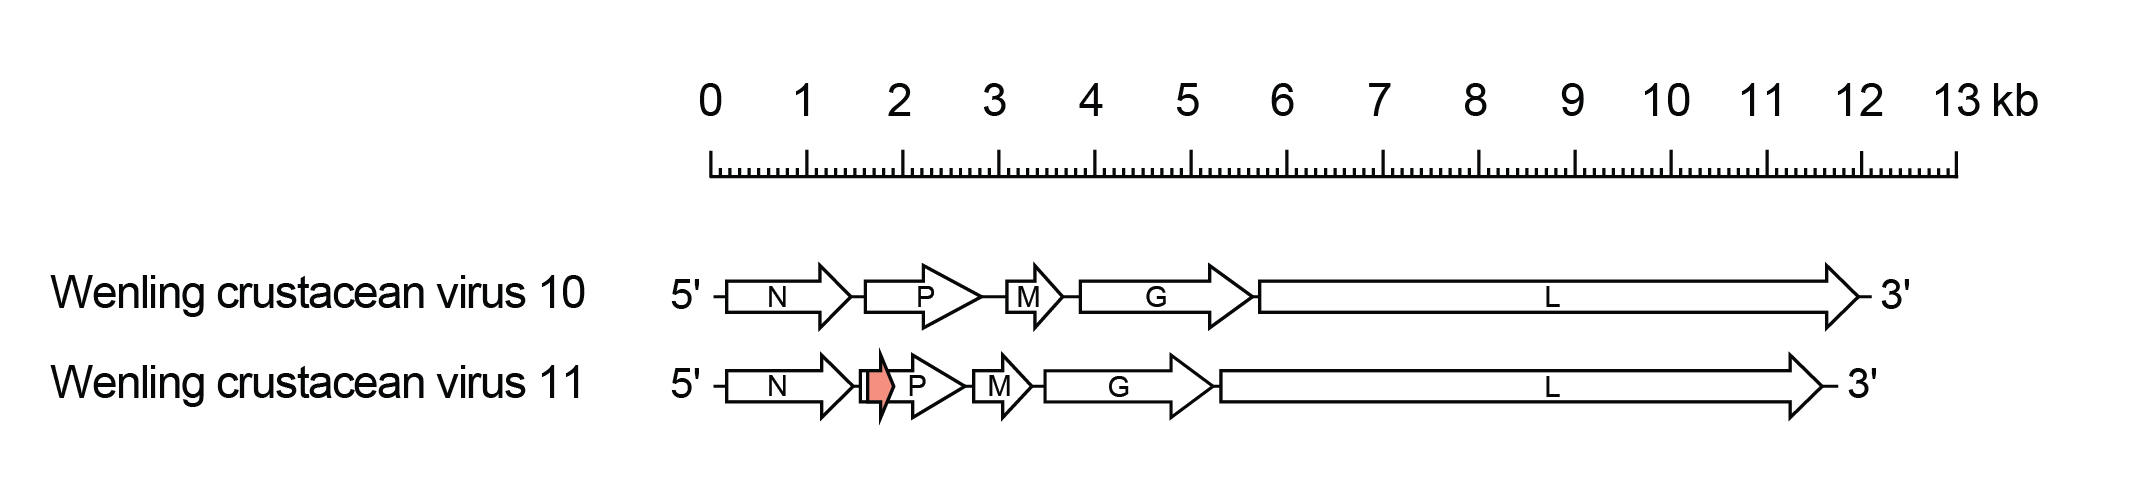 Alphacrustrhavirus genome